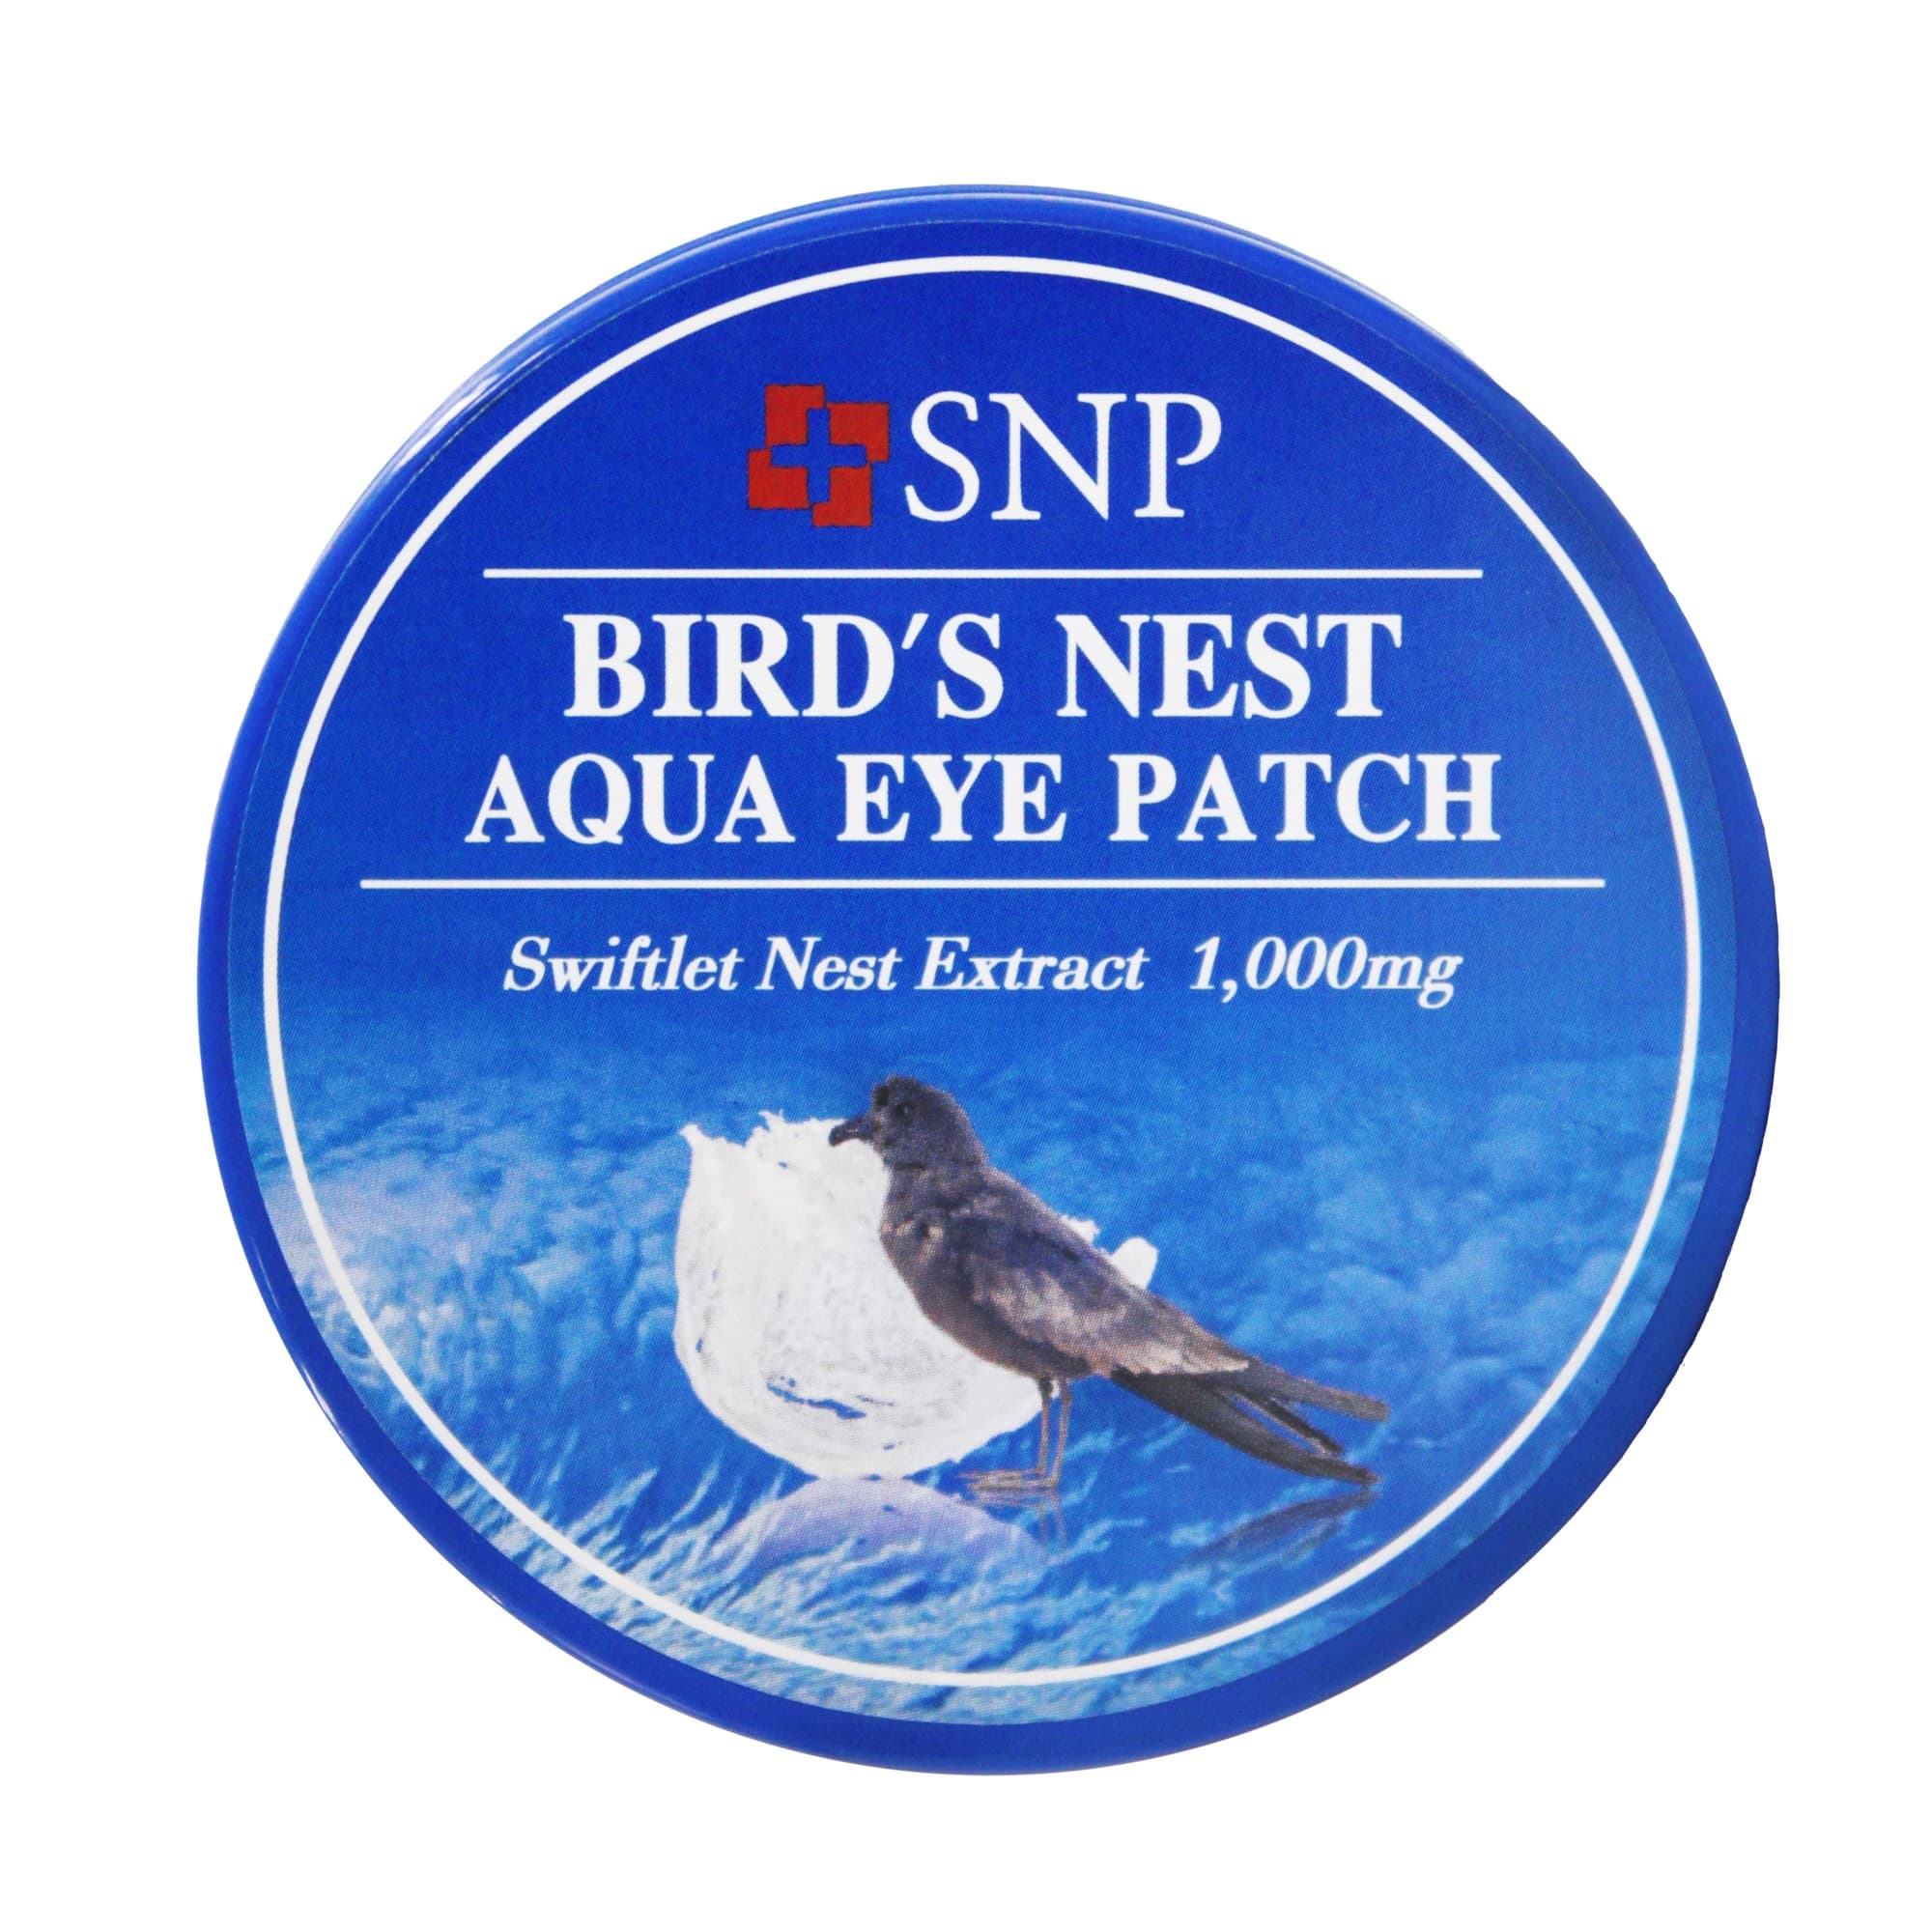 108_SNP Bird-s Nest Aqua Eye Patch